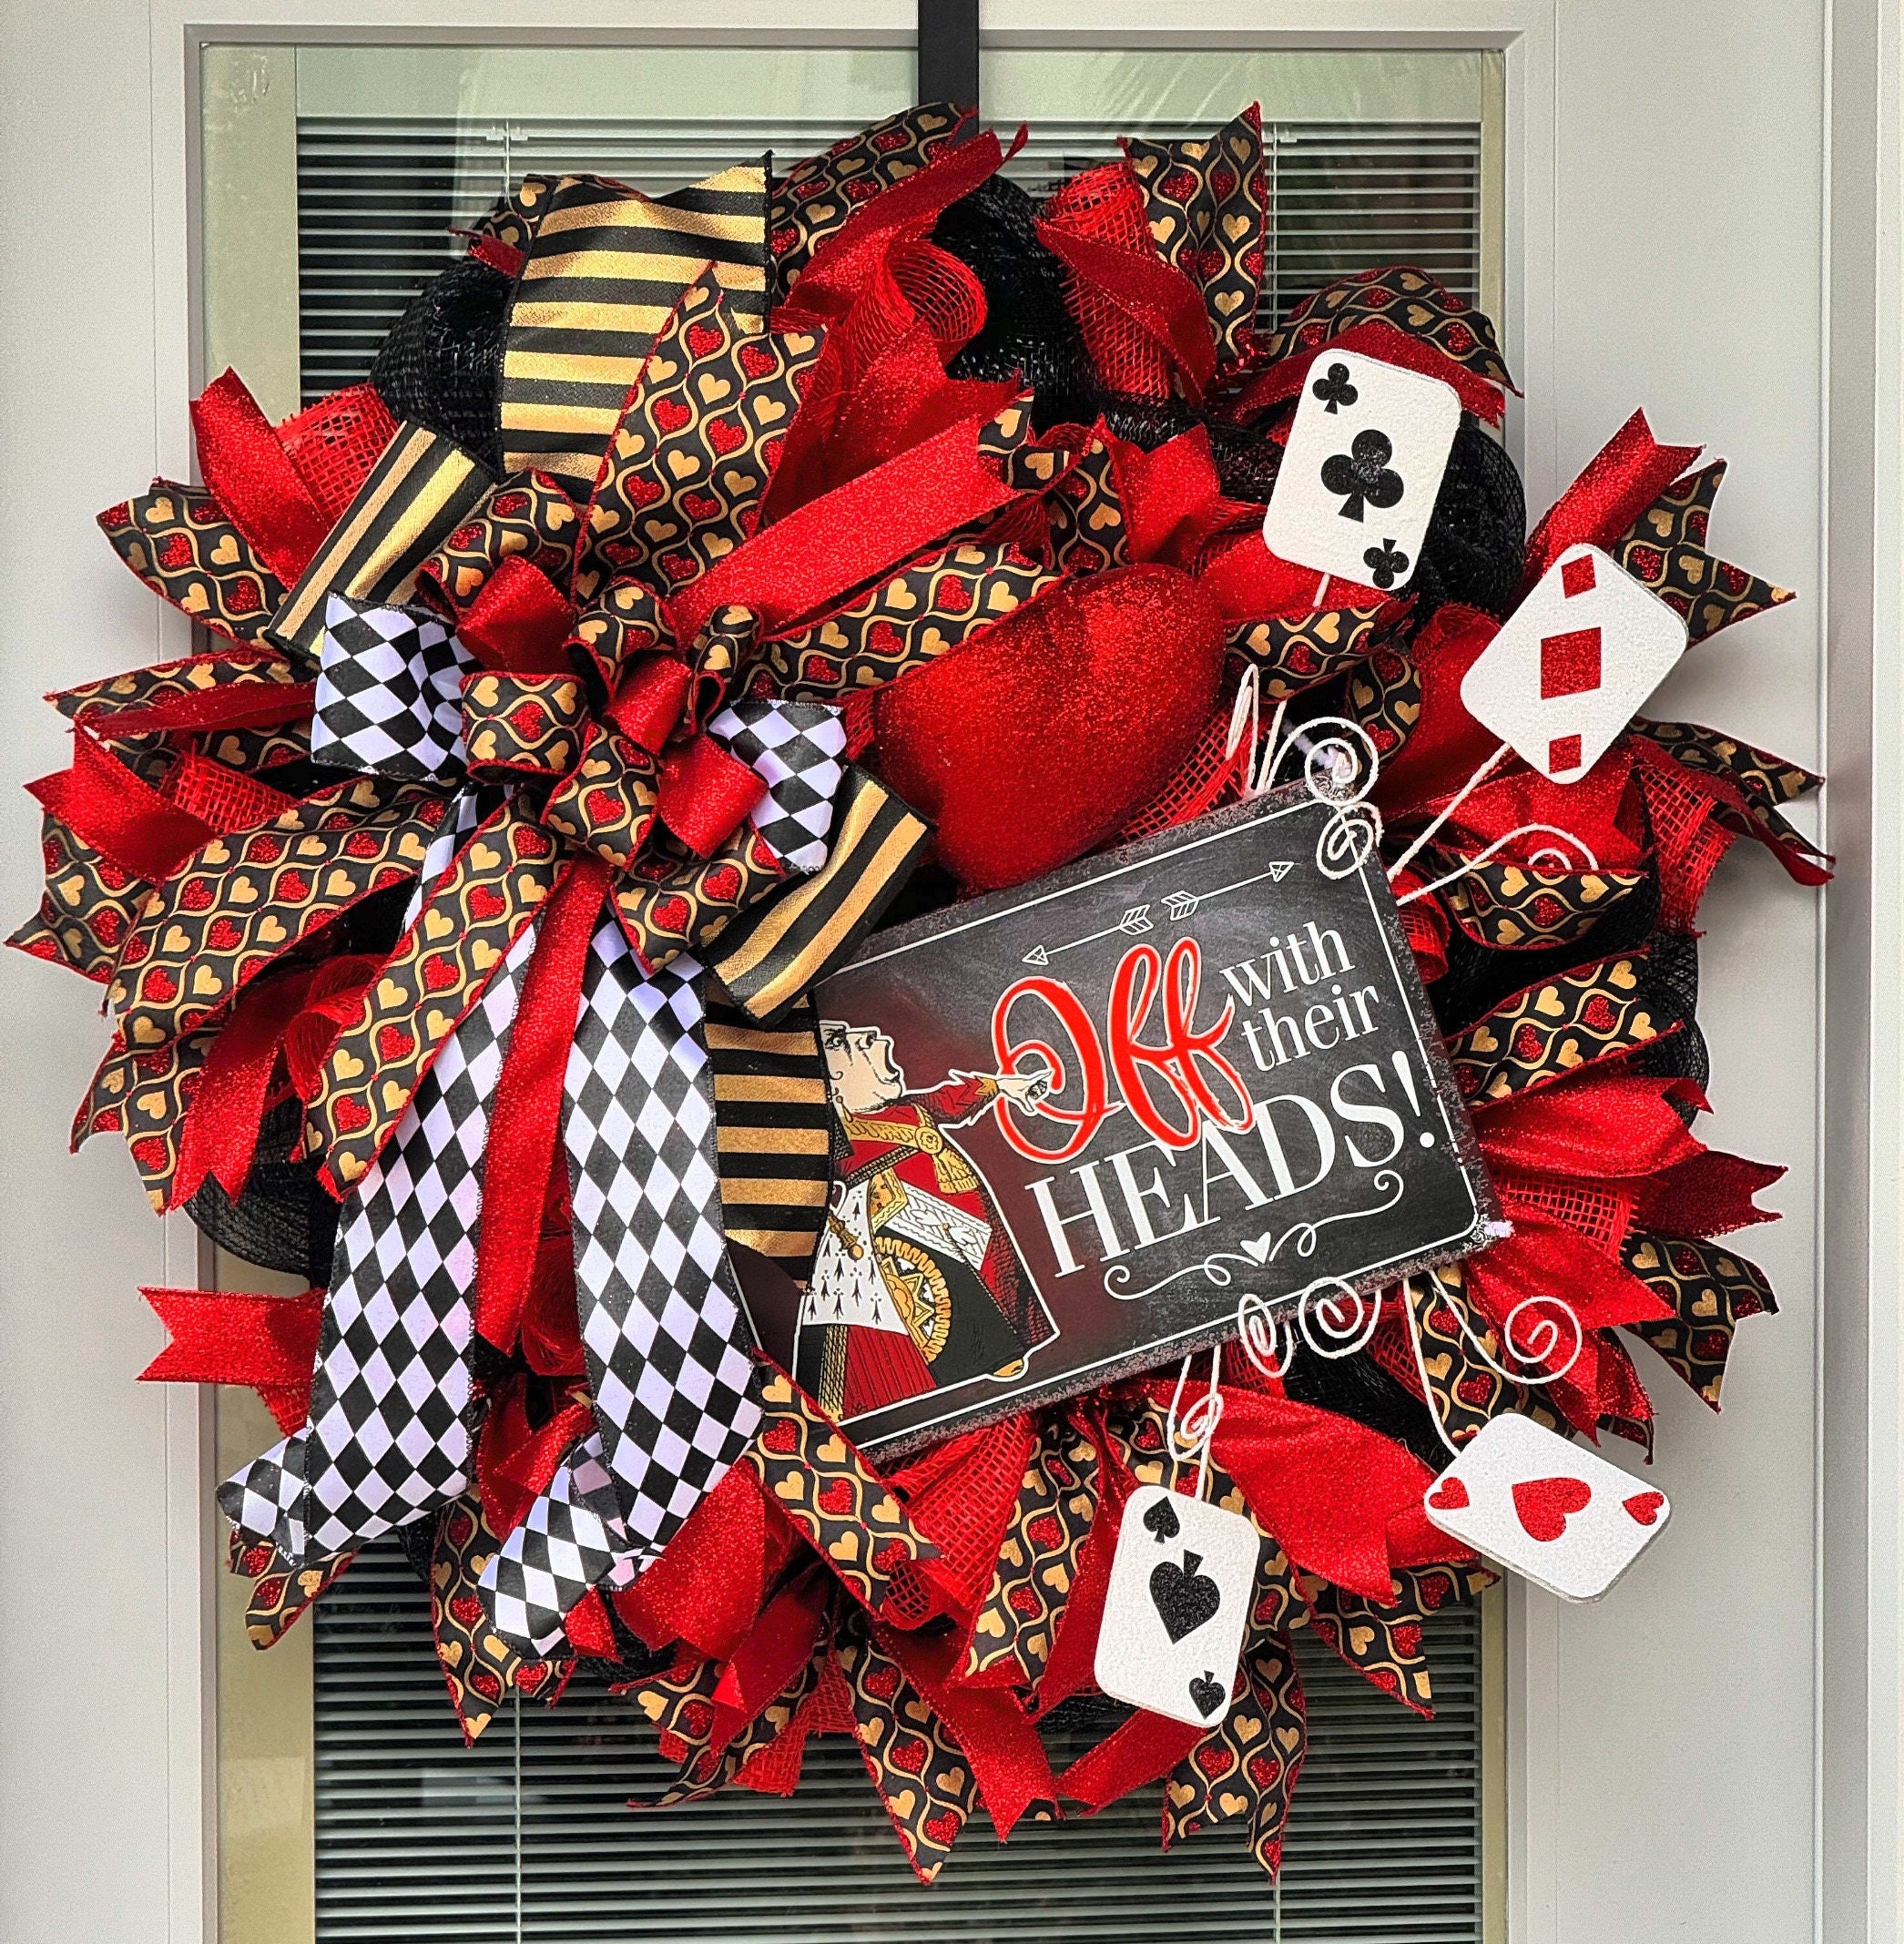 Glitzhome 17.75 in. H Valentine Fabric Heart Wreath 2019400013